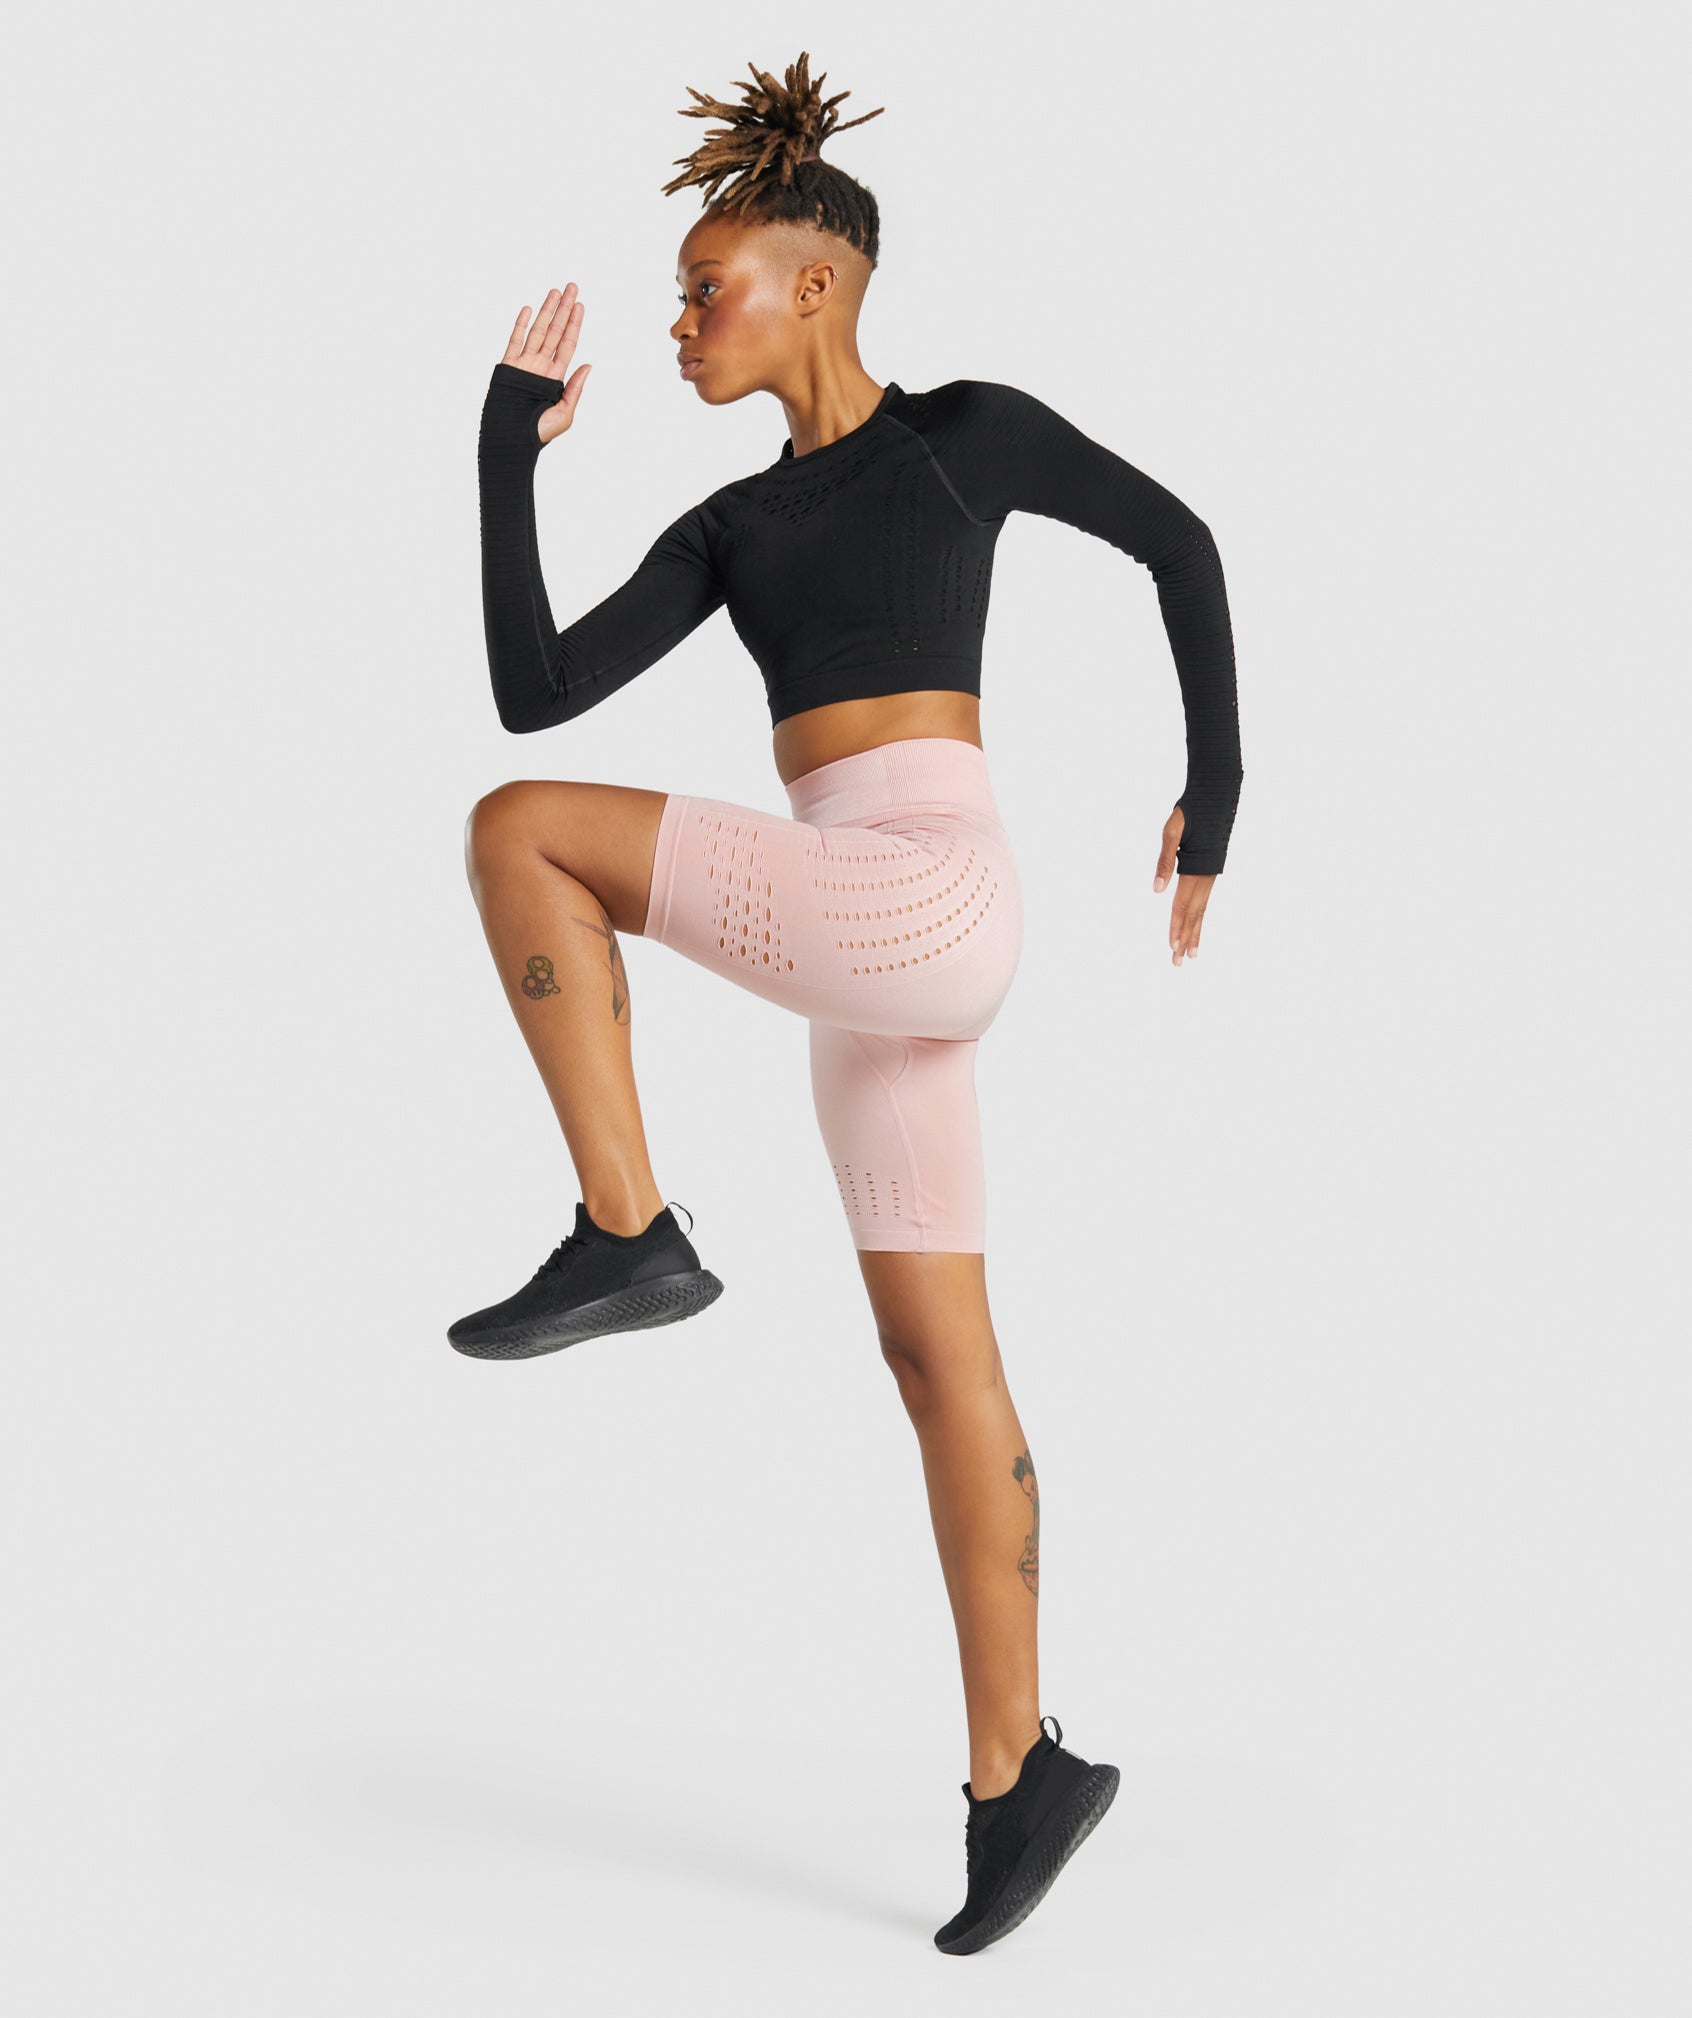 Gymshark Womens XS Glow Long Sleeve Seamless Crop Top Light Pink Perforated